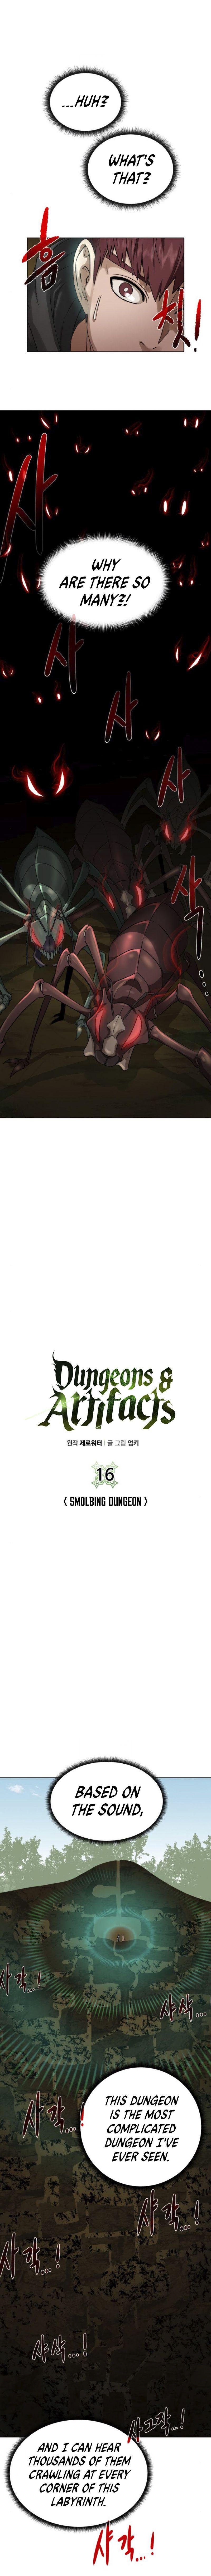 dungeons-artifacts-chap-16-1